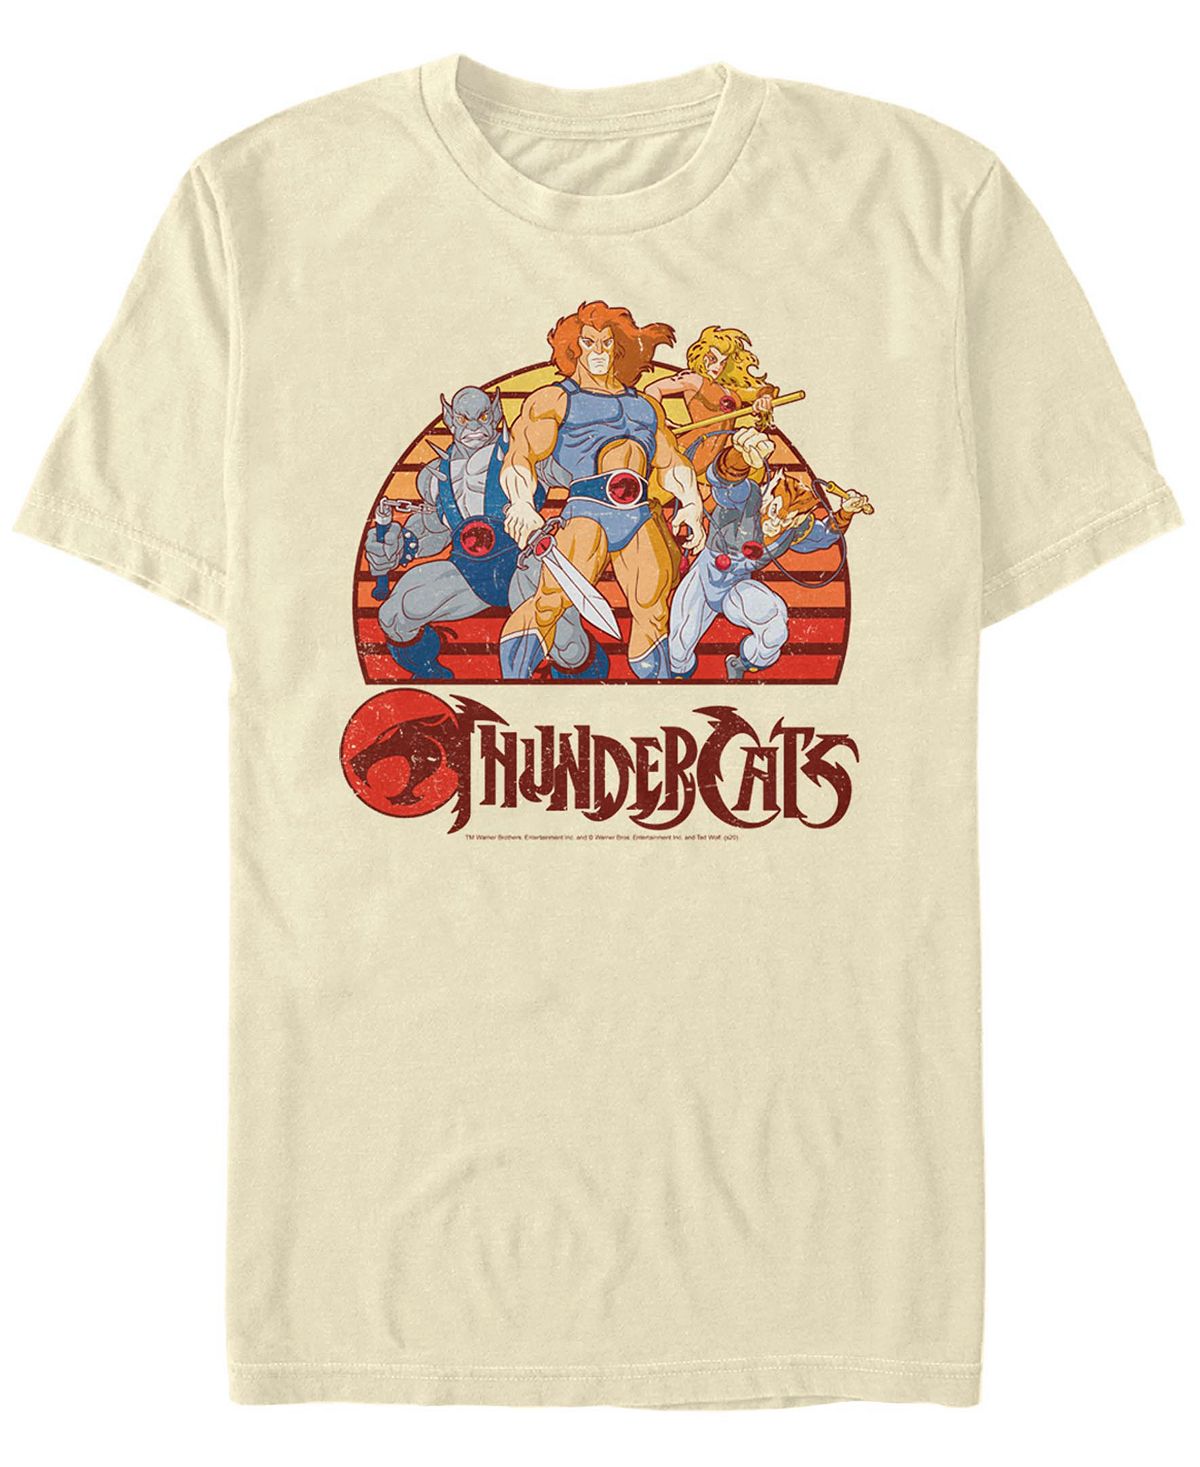 Мужская футболка thundercats group retro sunset с коротким рукавом Fifth Sun thundercat thundercat fair chance floating points remix 45 rpm